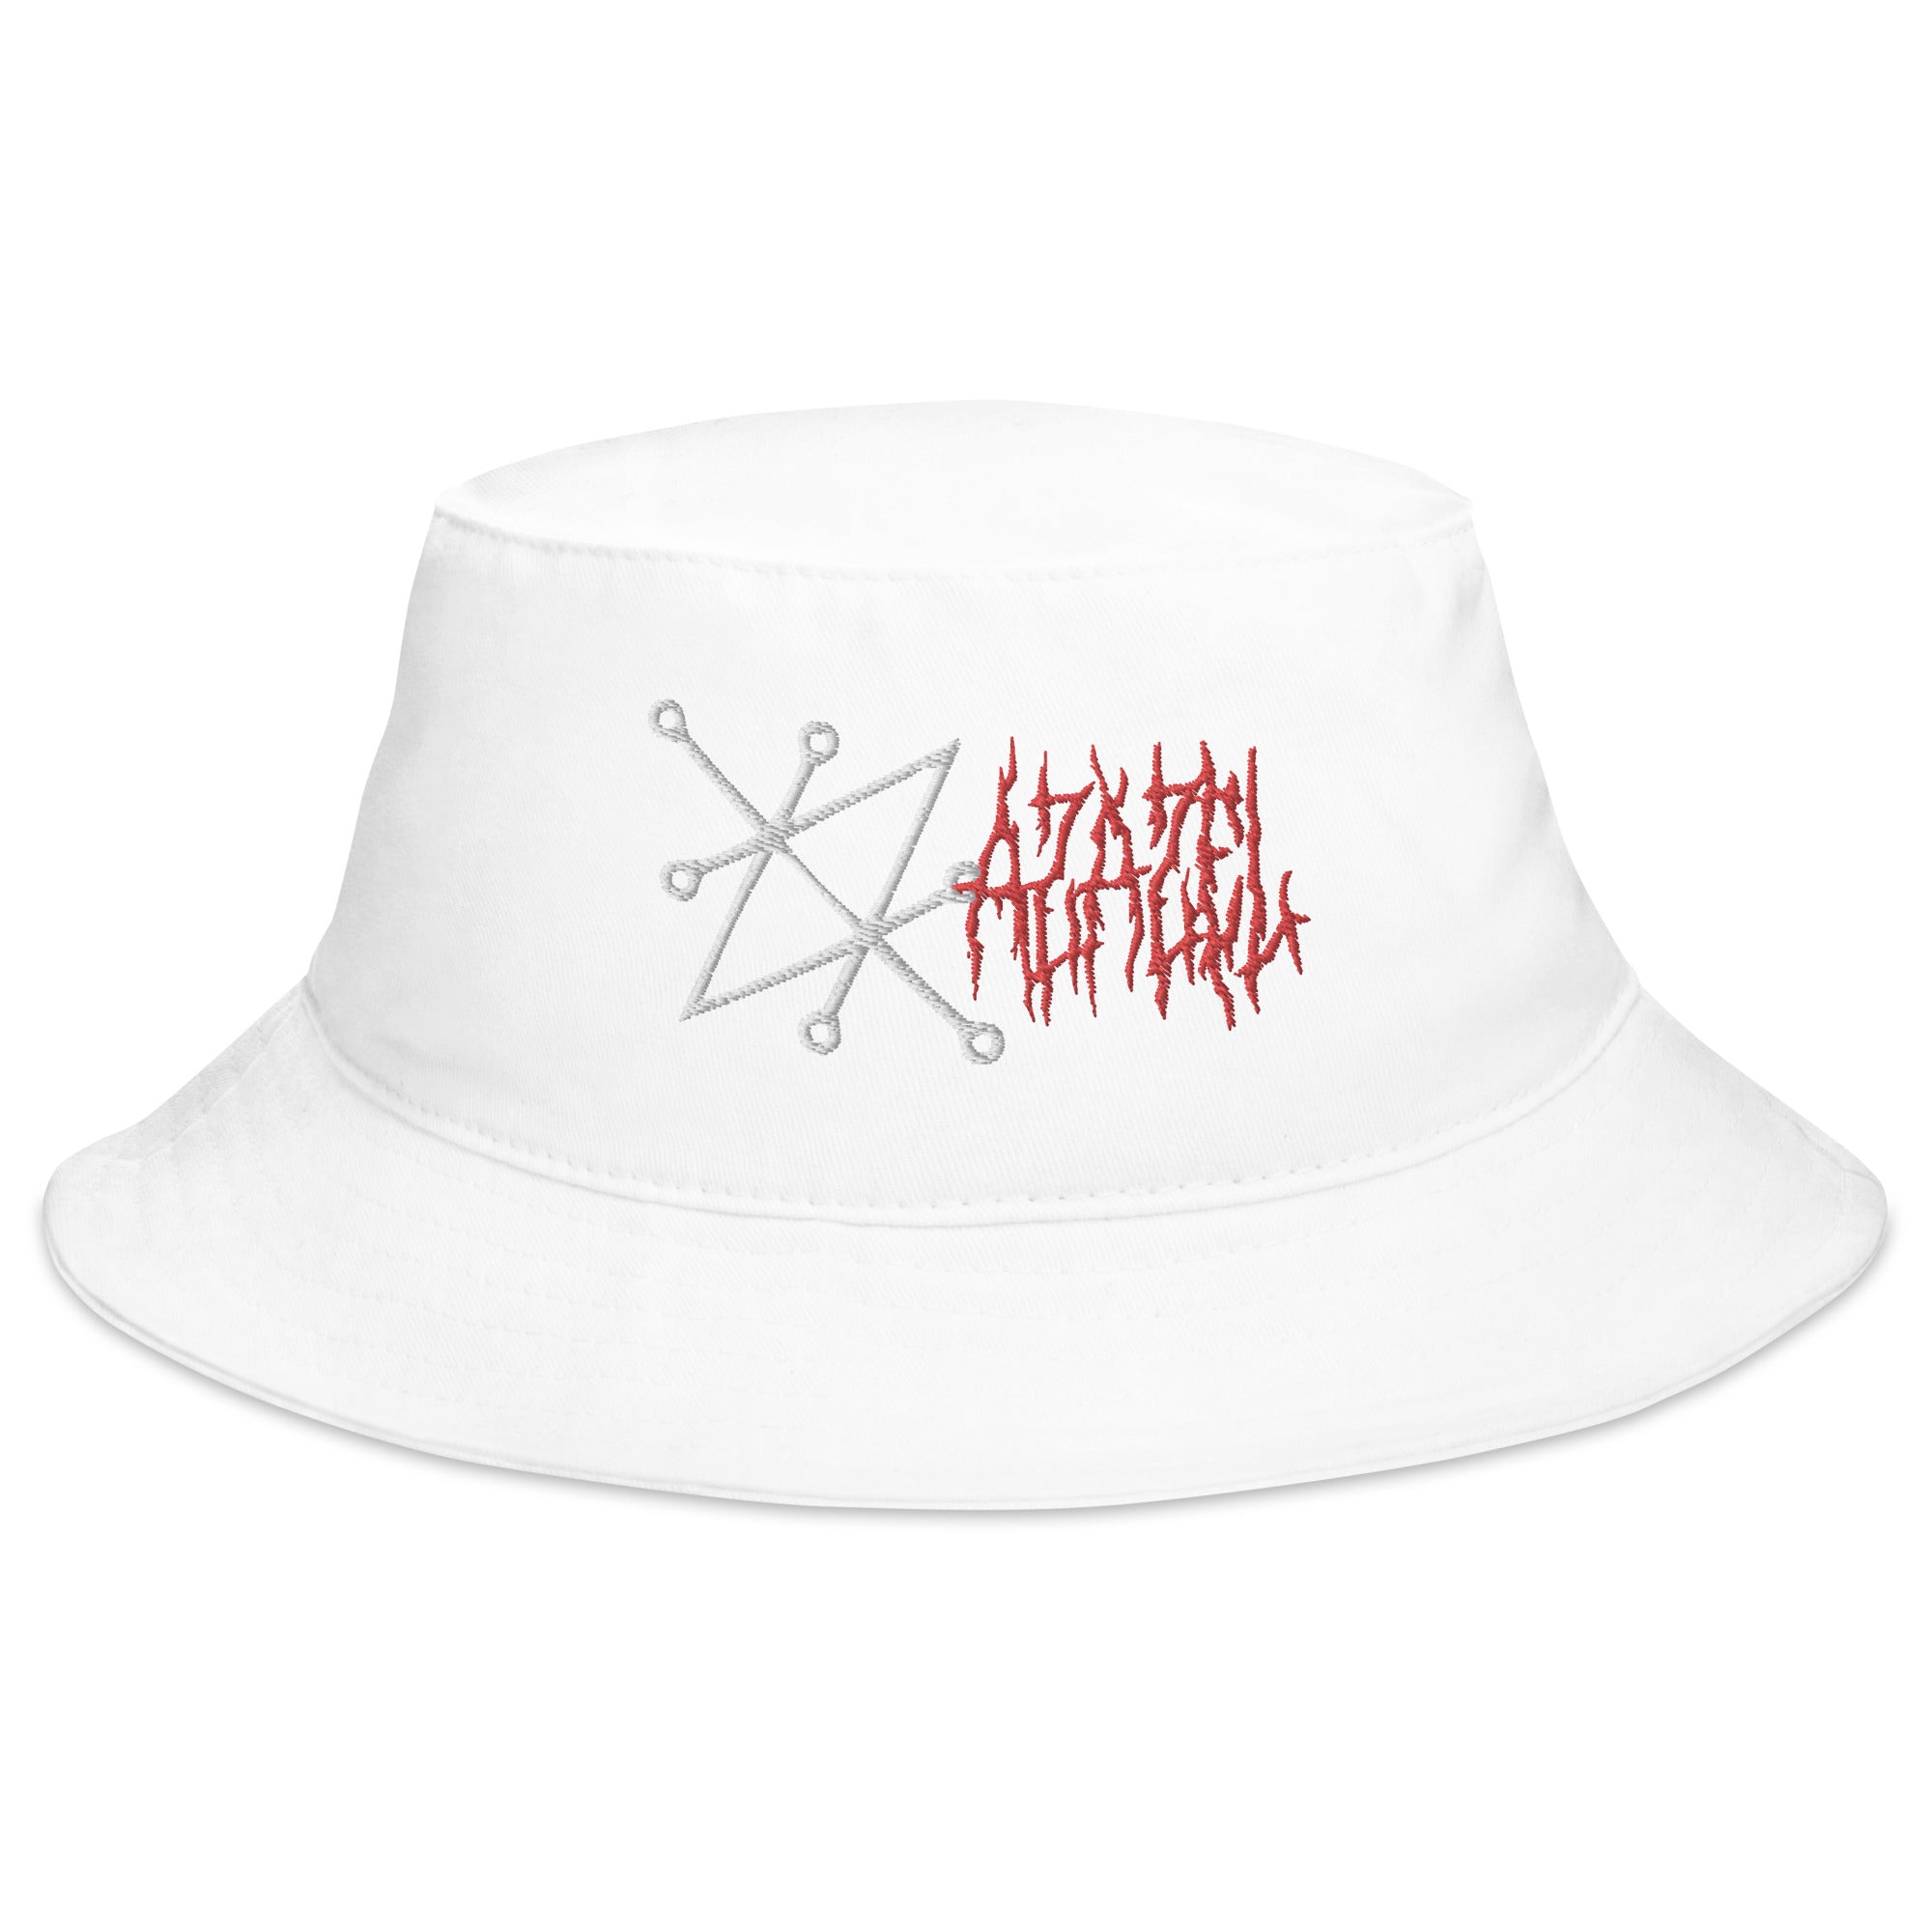 Sigil of Azazel Demon Occult Symbol Embroidered Bucket Hat